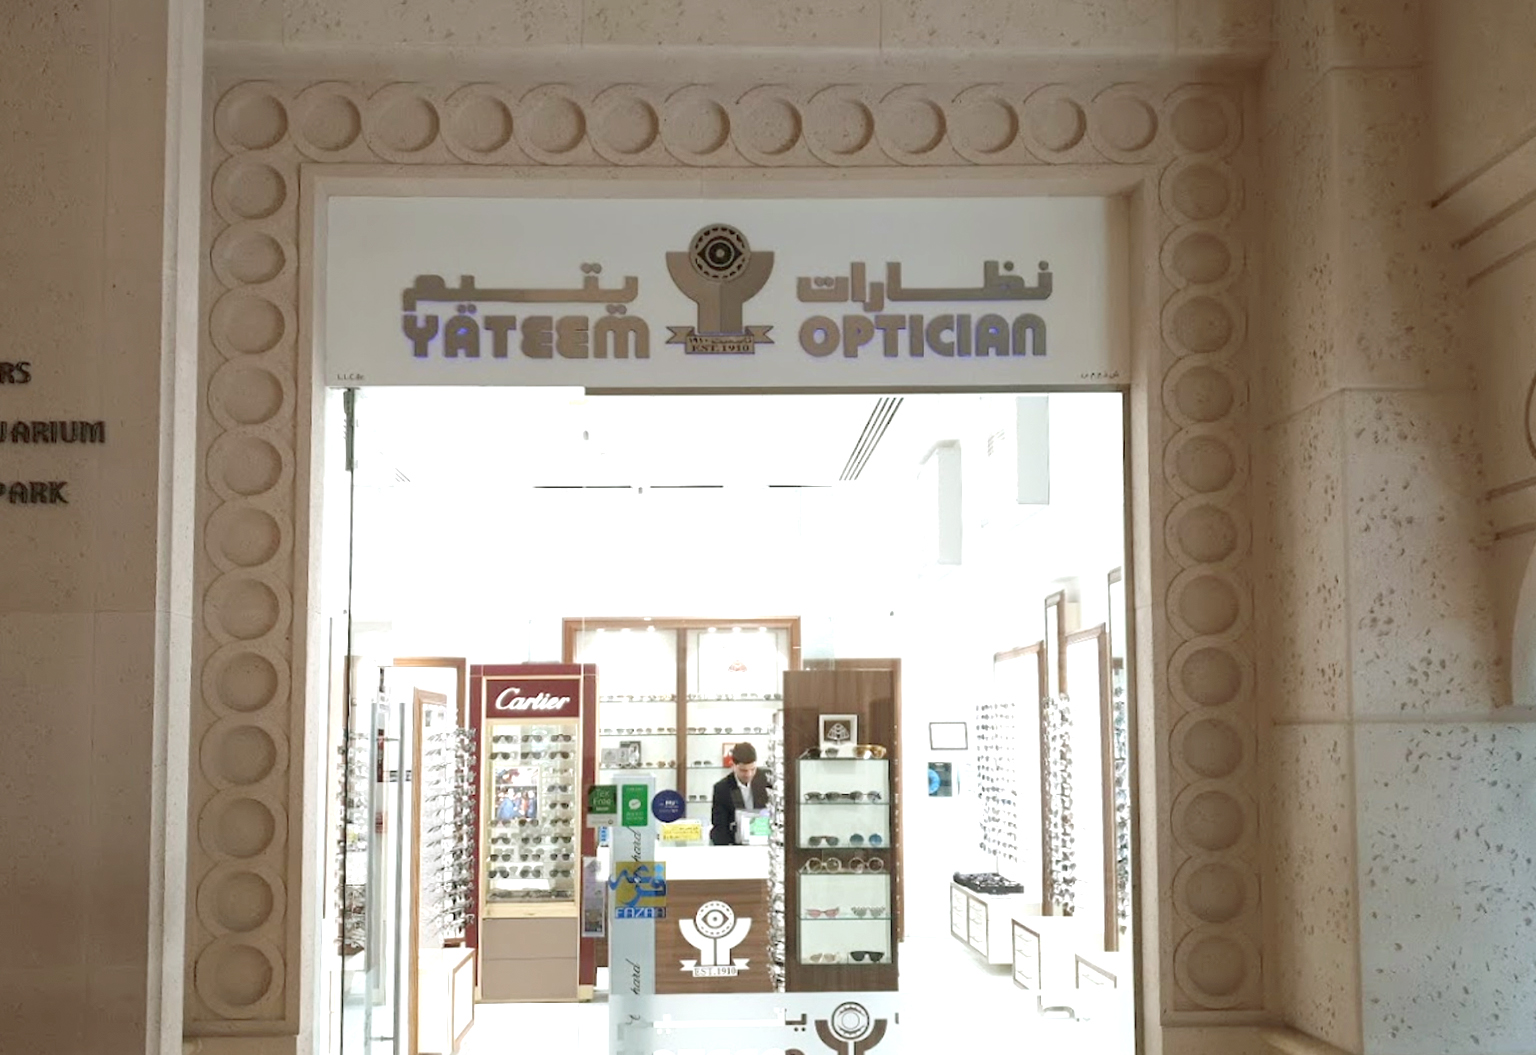 yateem_optician